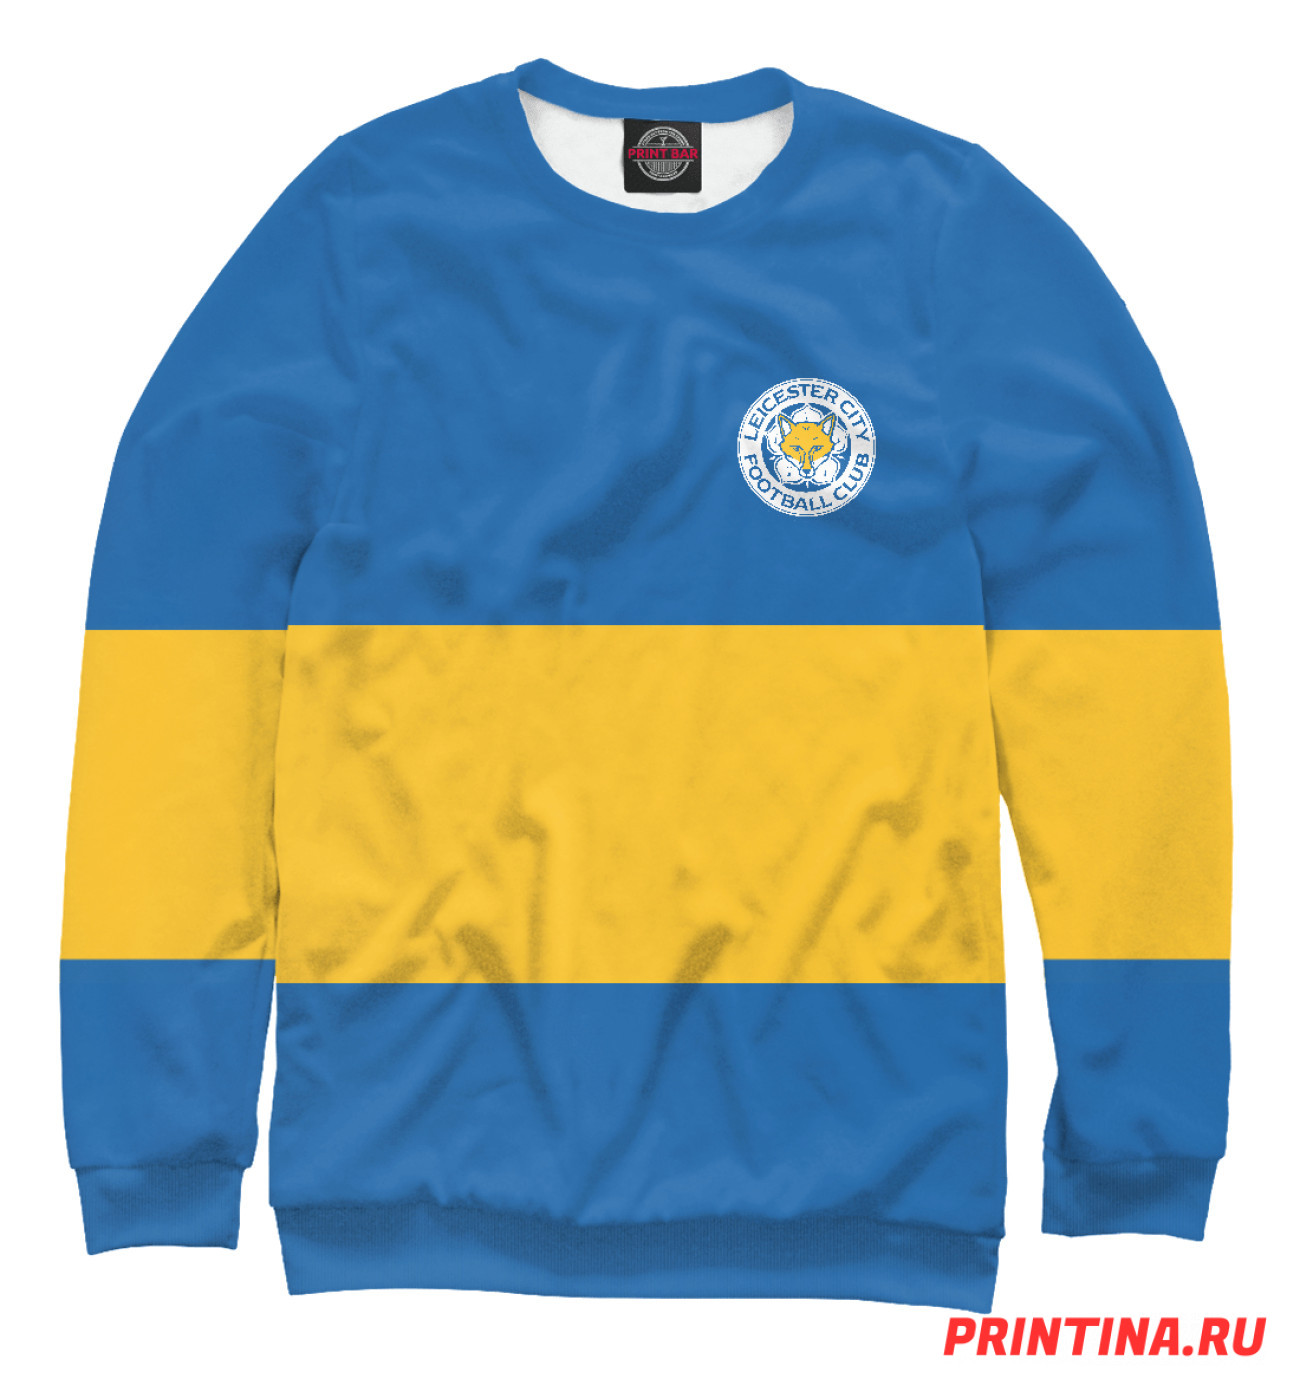 Женский Свитшот Leicester City Blue&Yellow, артикул: FTO-730483-swi-1